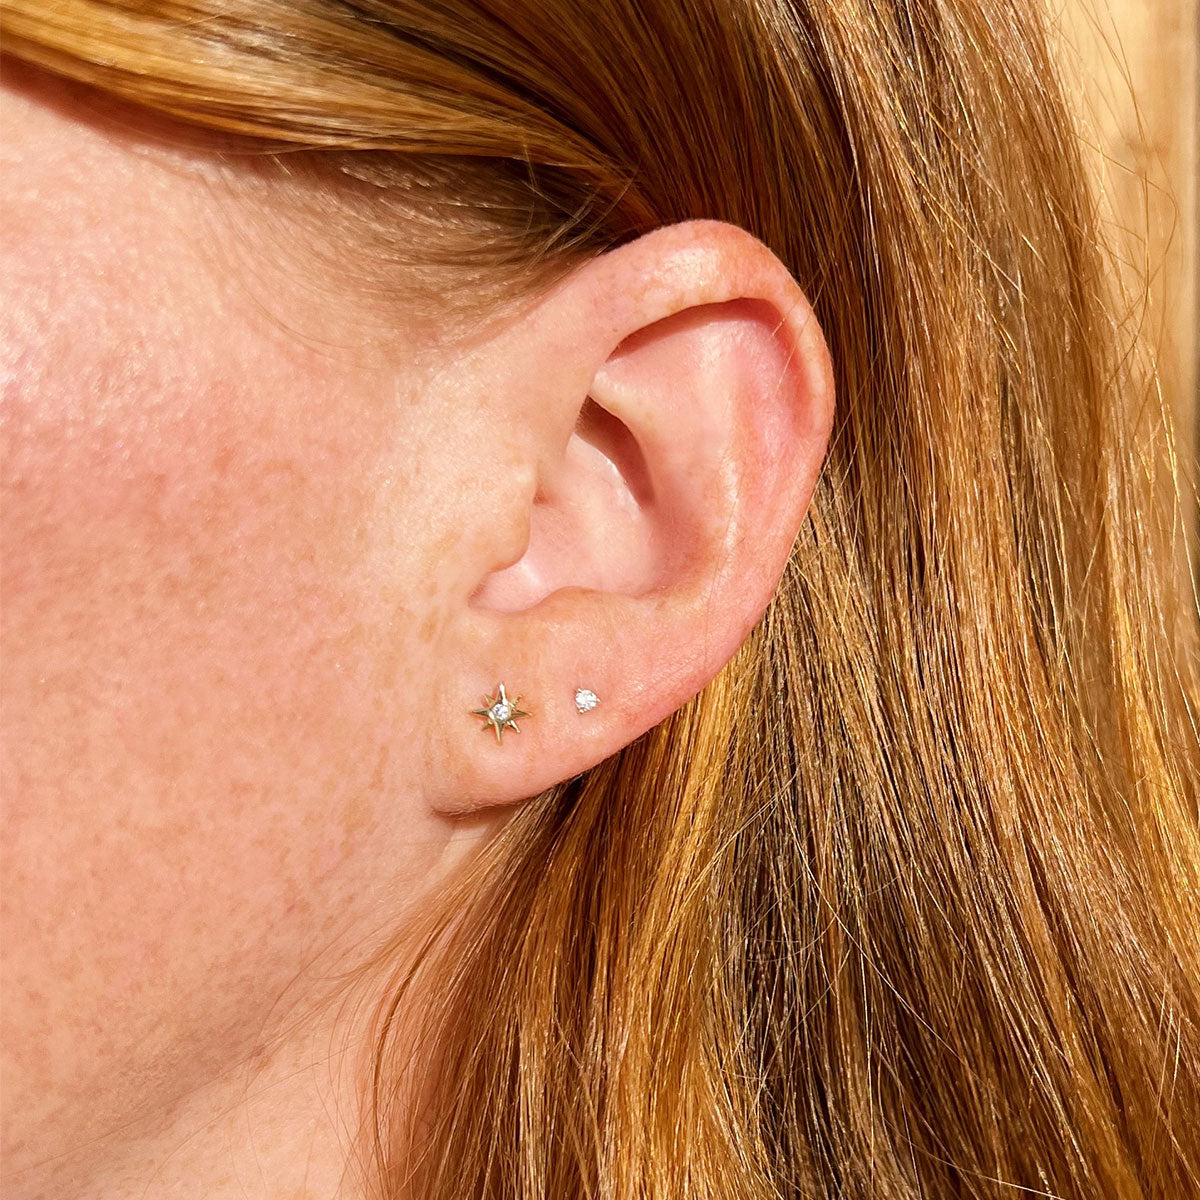 Baby Solitaire Diamond Stud Earring